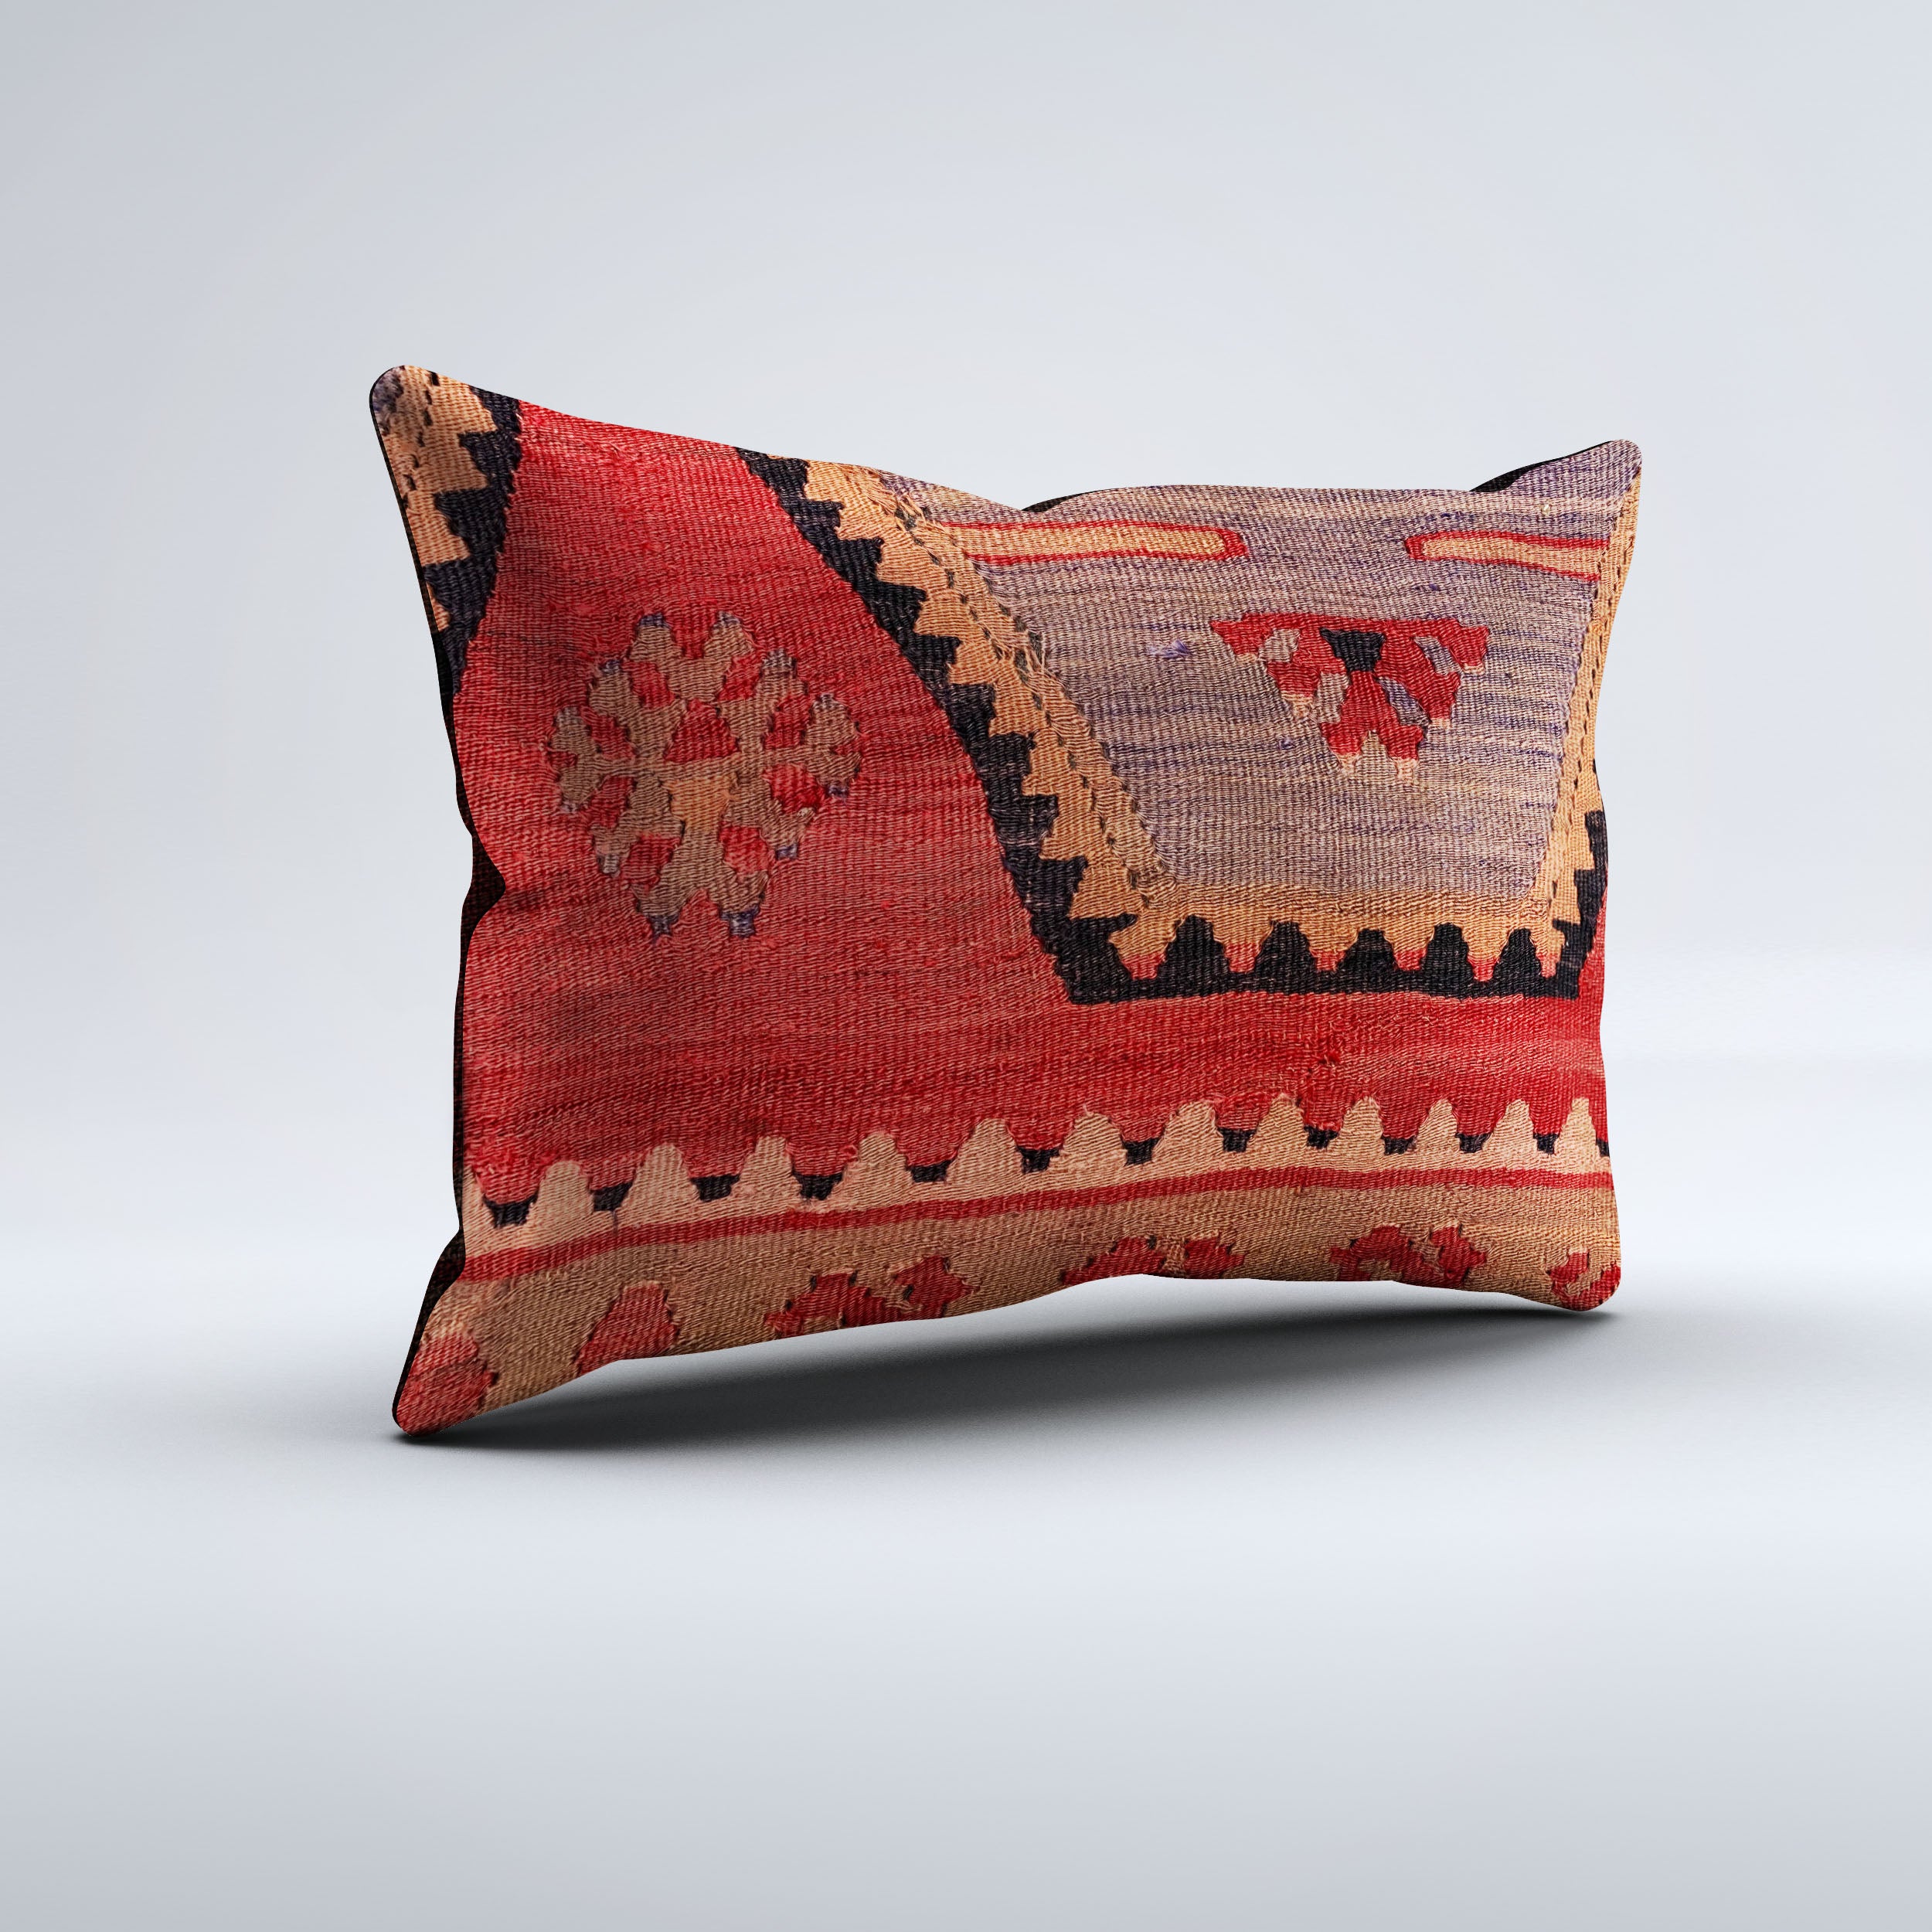 Vintage Turkish Kilim Cushion Cover 60x40 cm Square Wool Kelim Pillowcase 64774